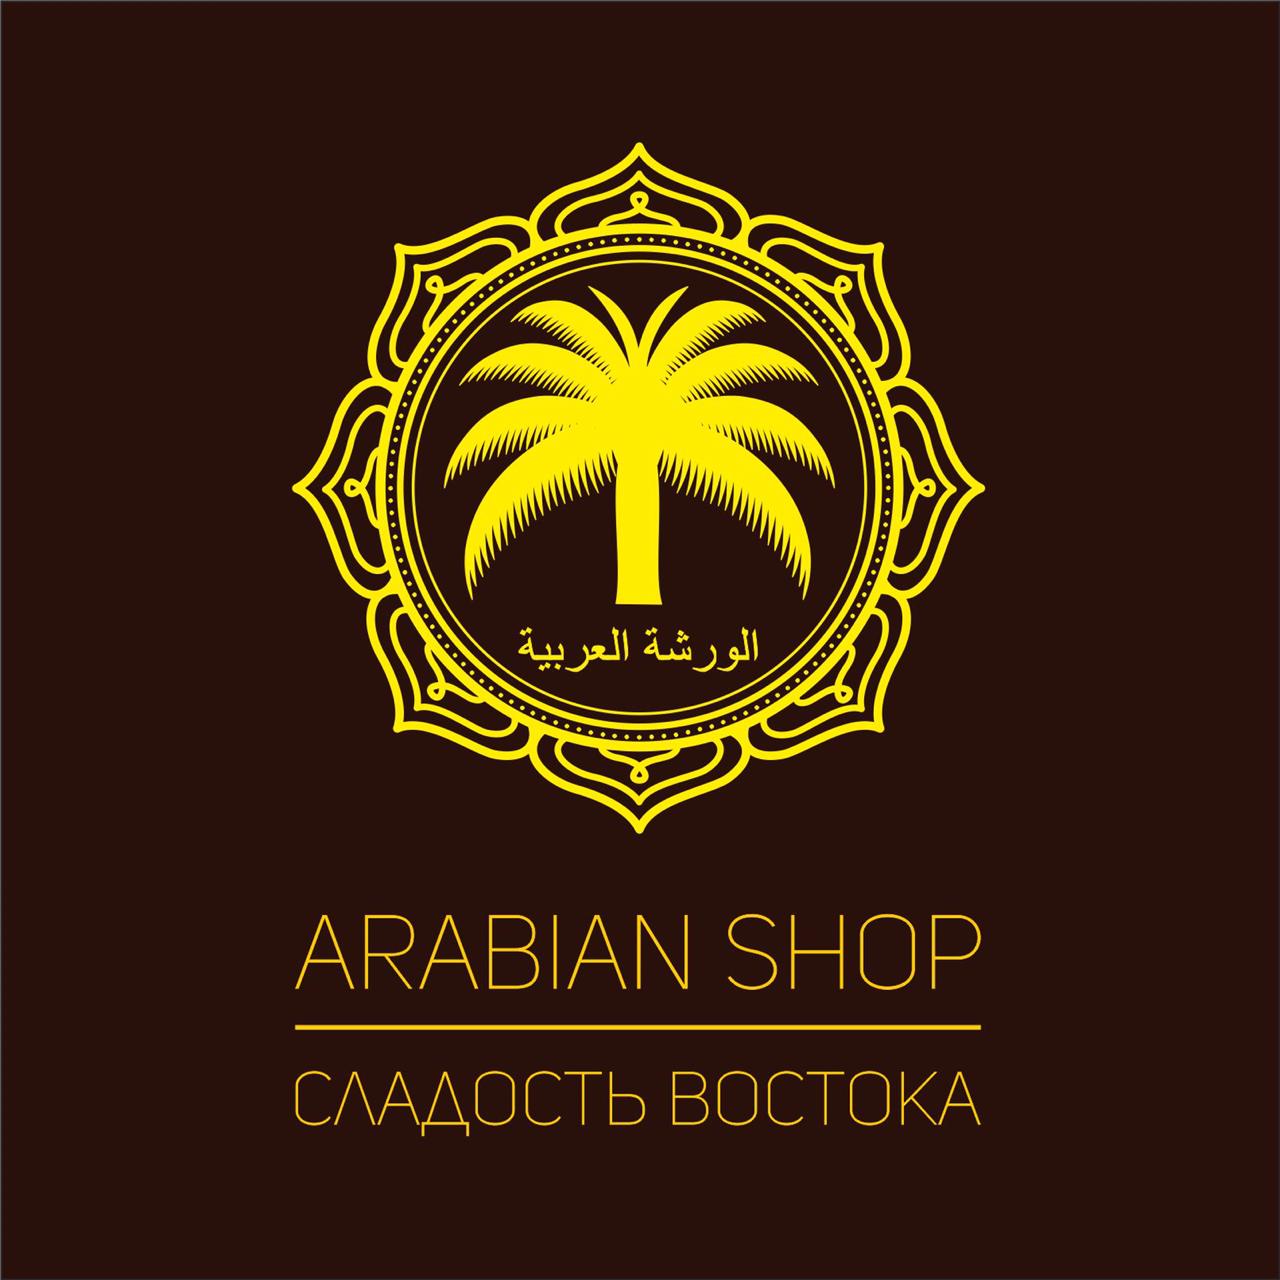 Arabian Shop